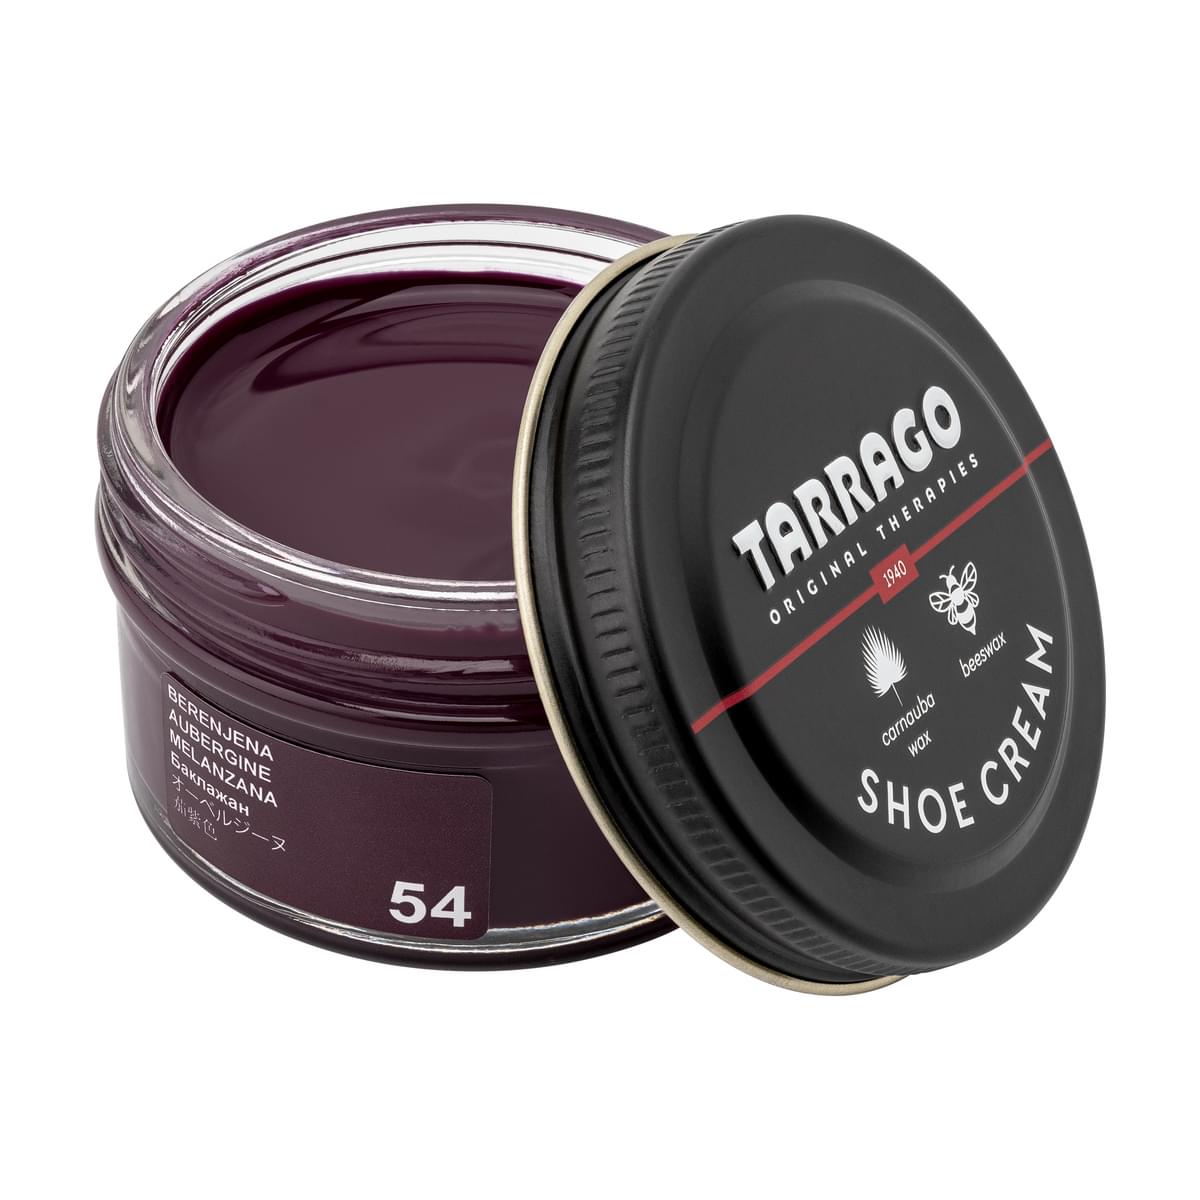 Tarrago Shoe Cream  - Aubergine - 54